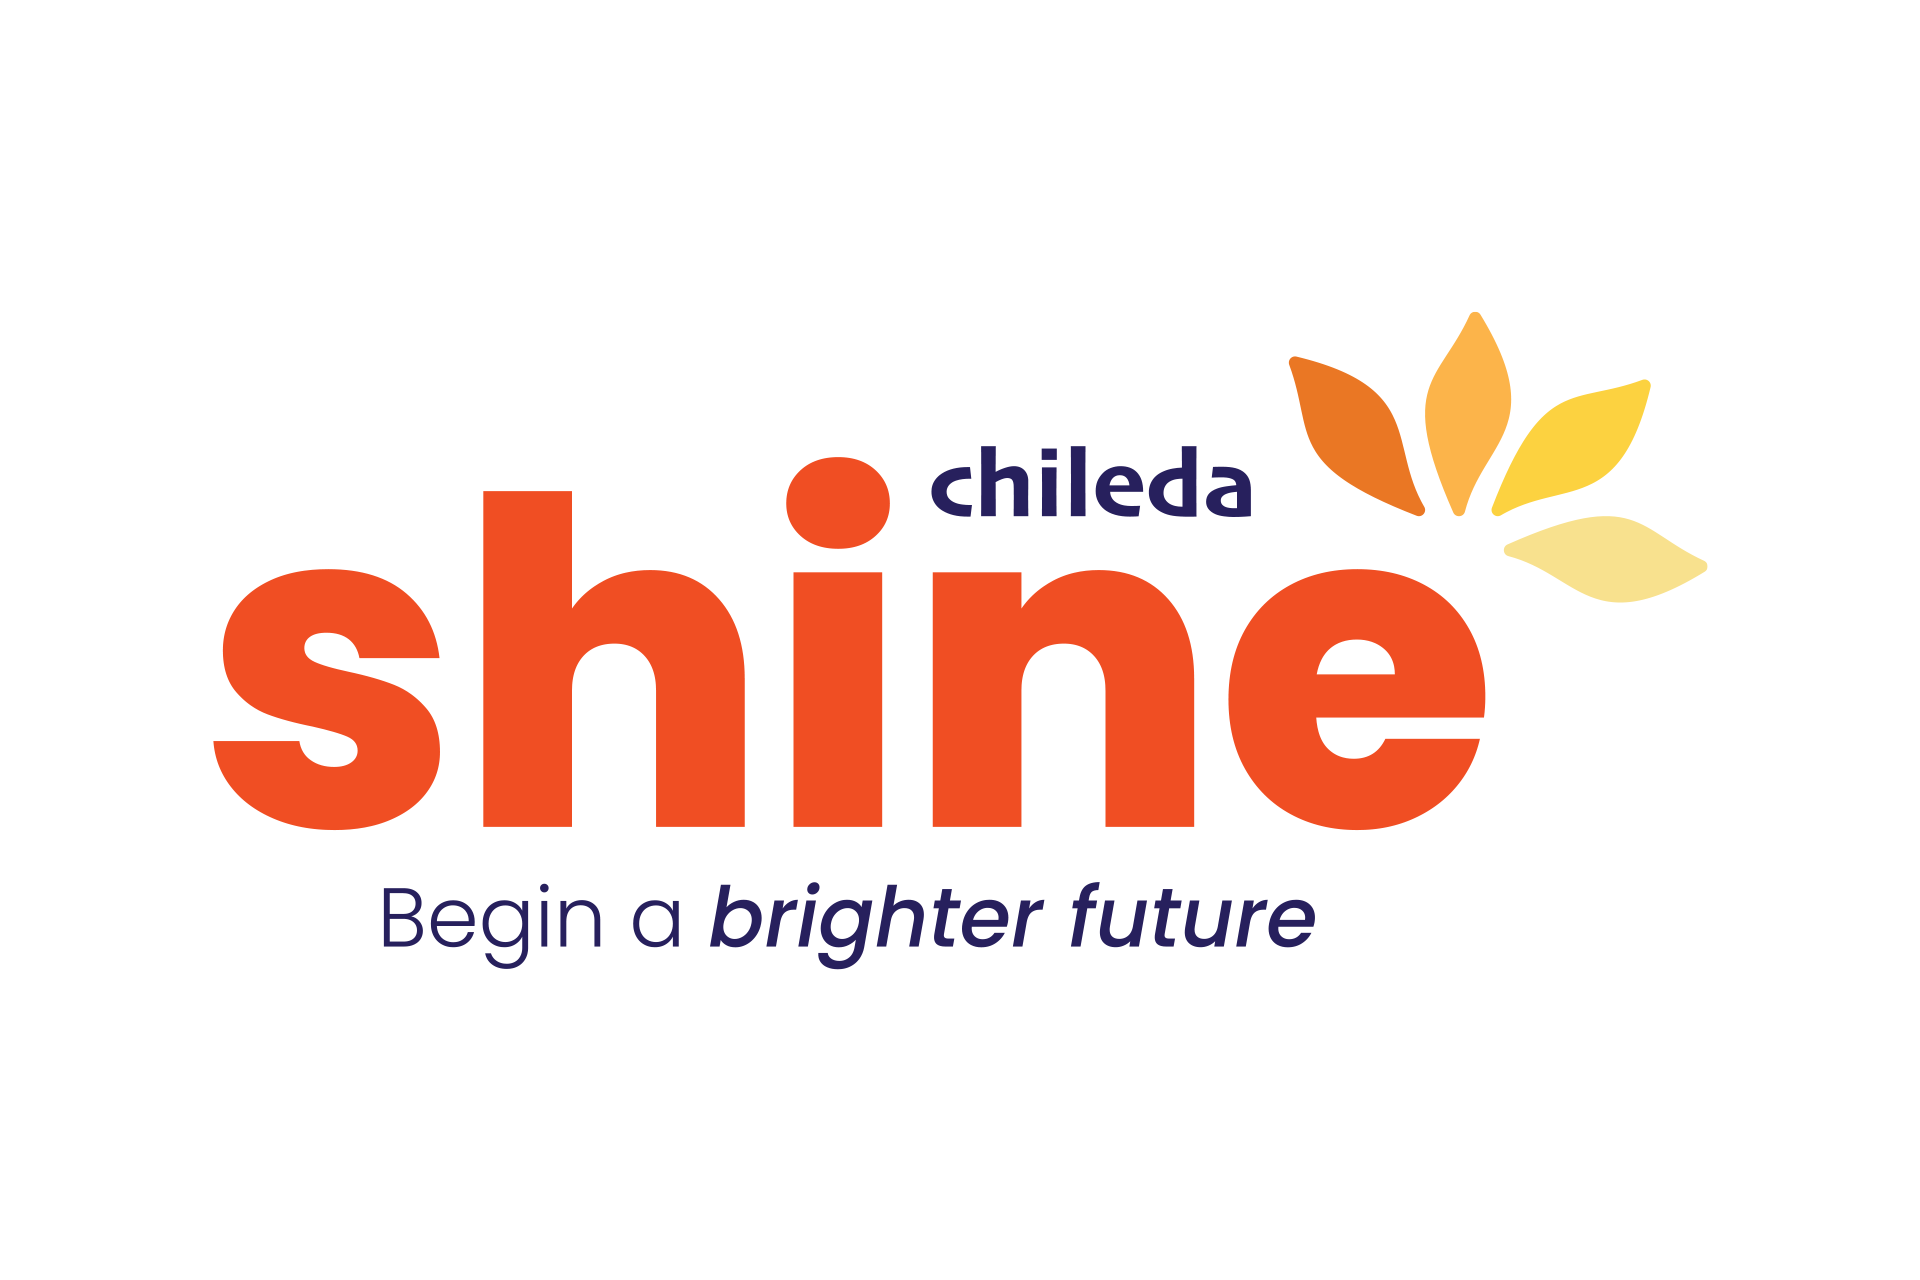 Chileda shine logo in color